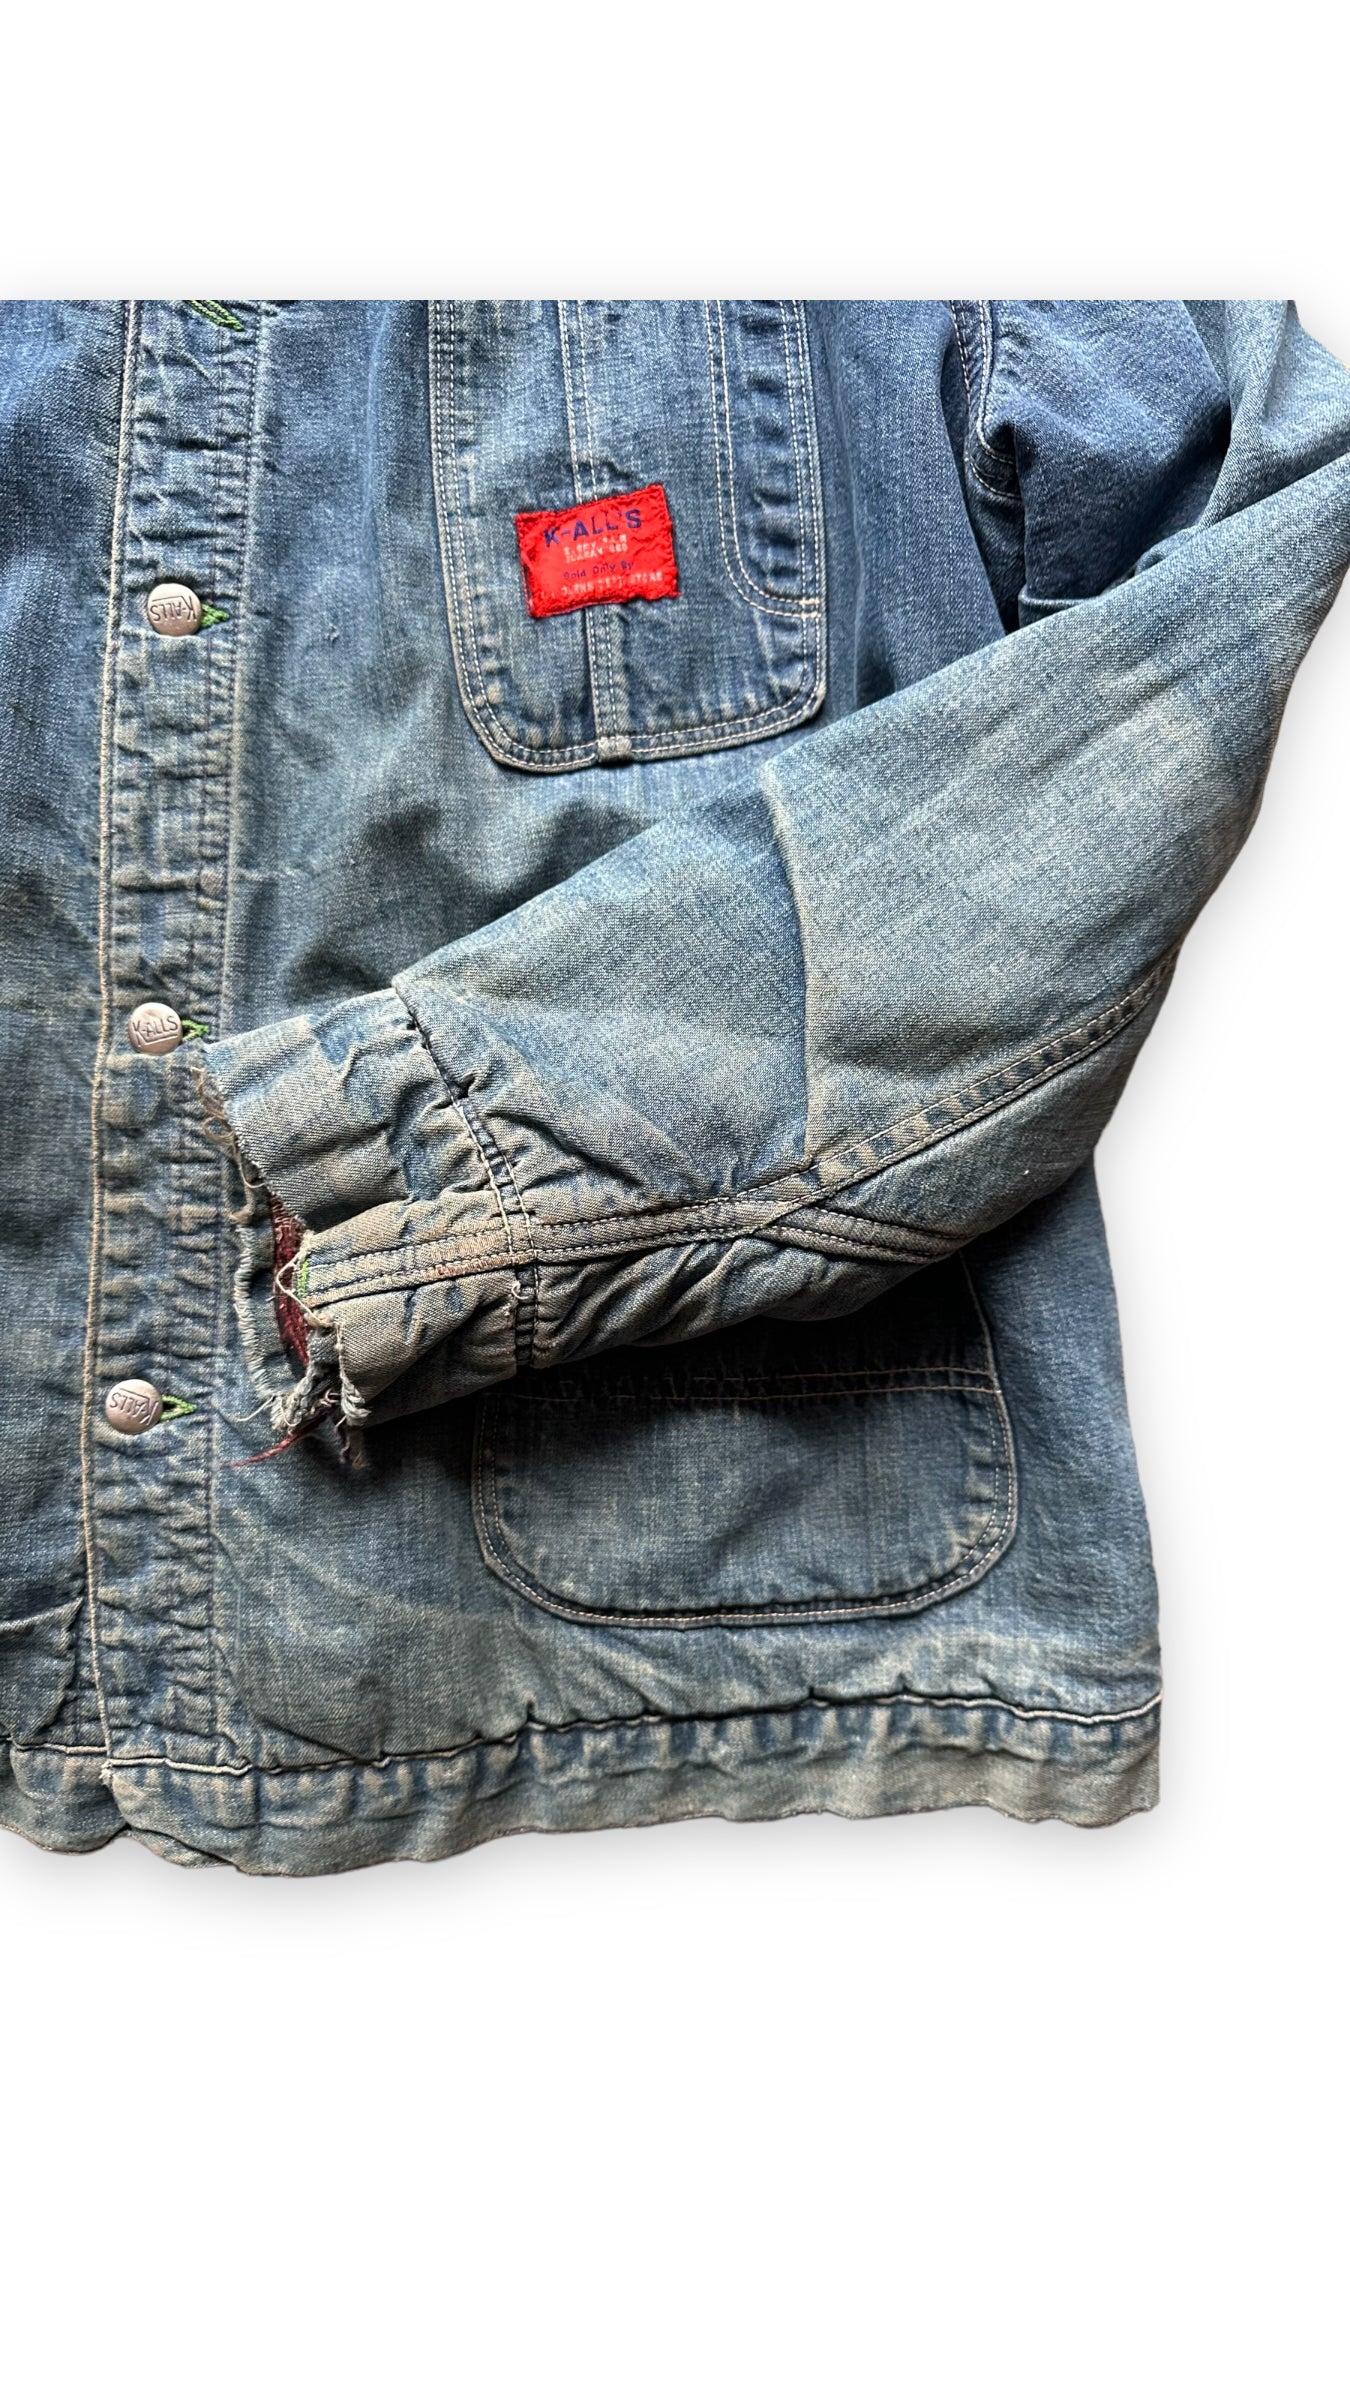 Left Cuff & Sleeve View on Vintage K-Alls Brand Blanket Lined Denim Chore Jacket SZ XL | Seattle Vintage Workwear | Barn Owl Vintage